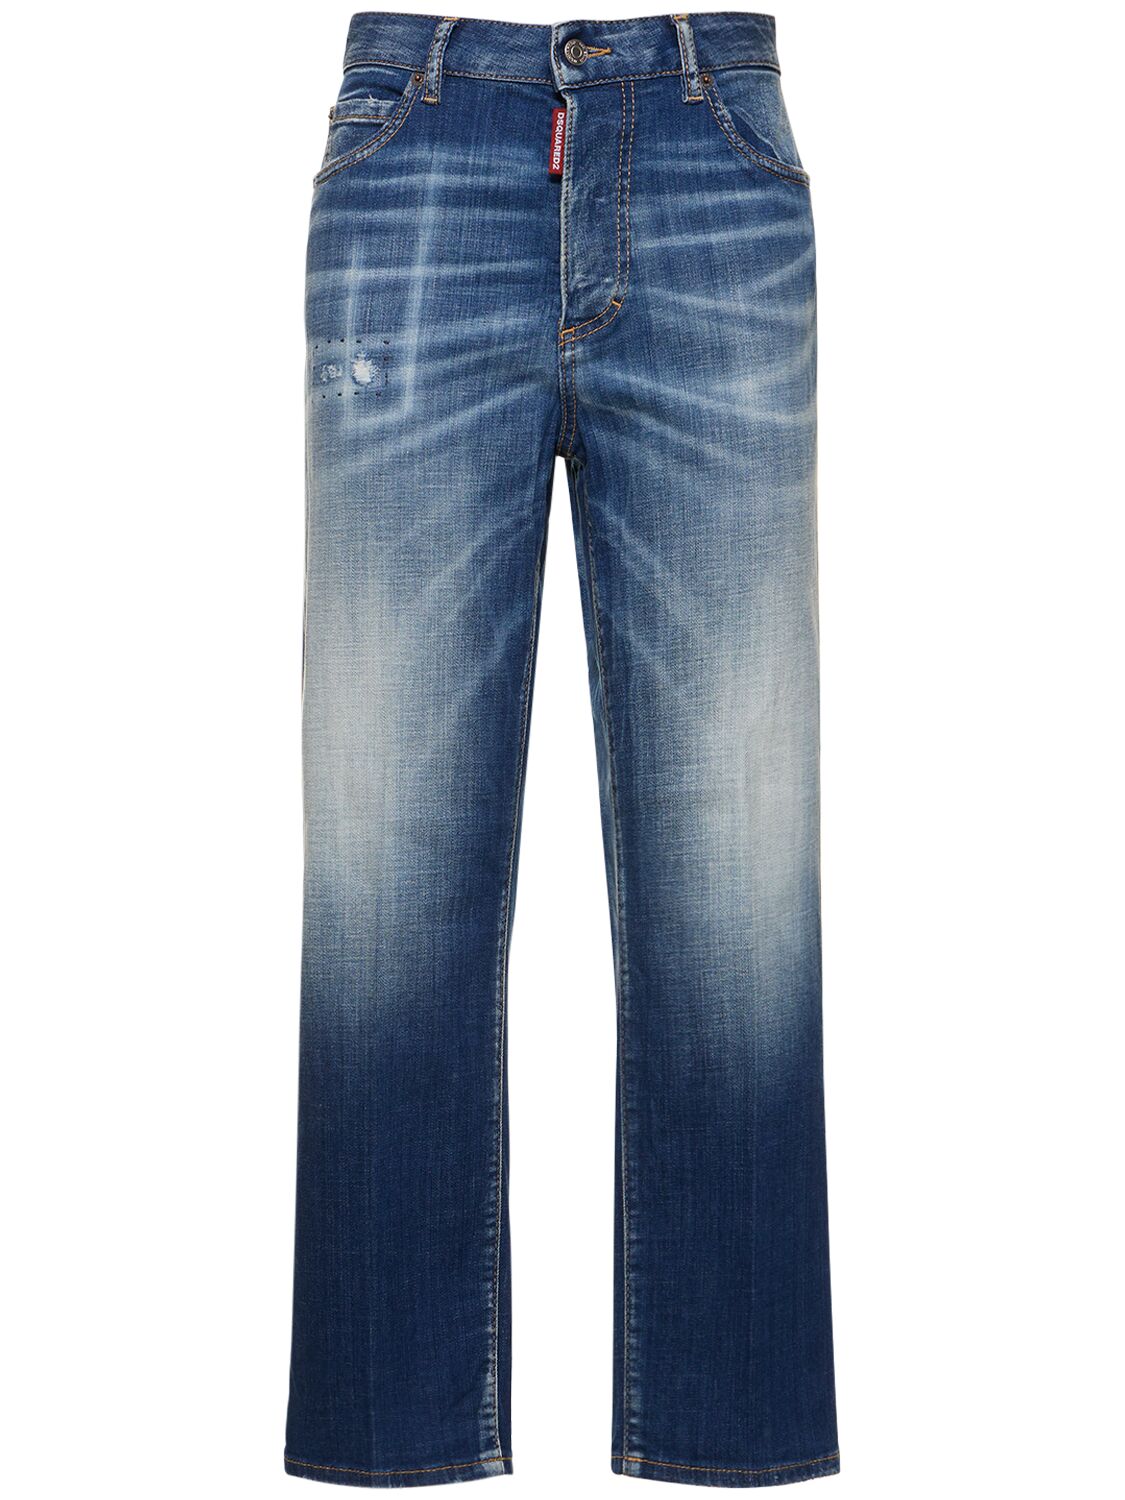 Image of Boston Denim High Rise Crop Jeans